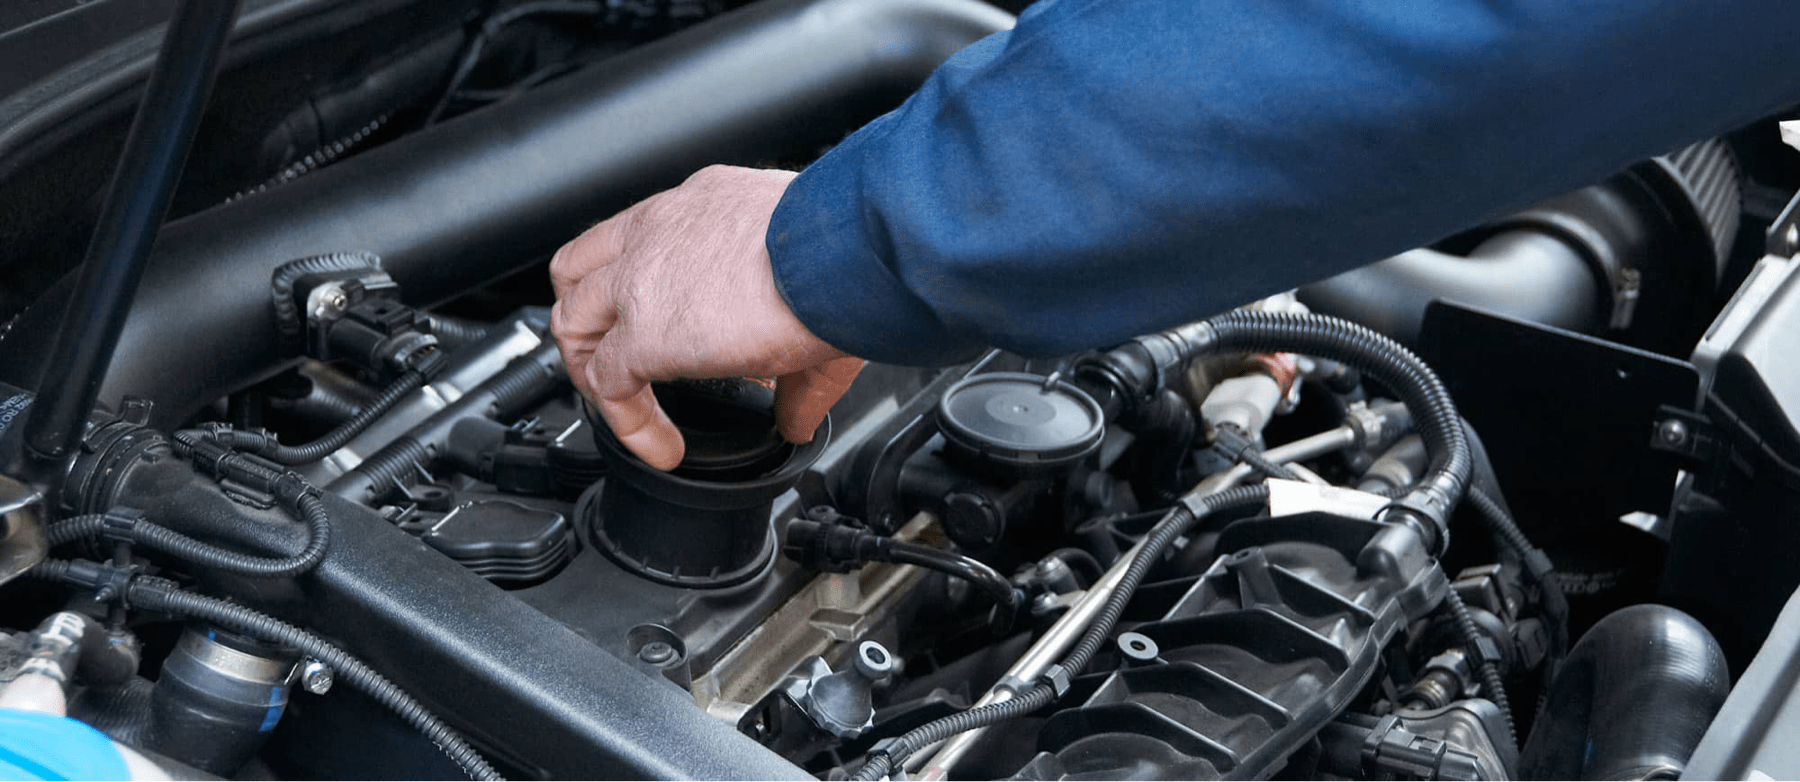 service technician unscrews oil reservoir in car engine